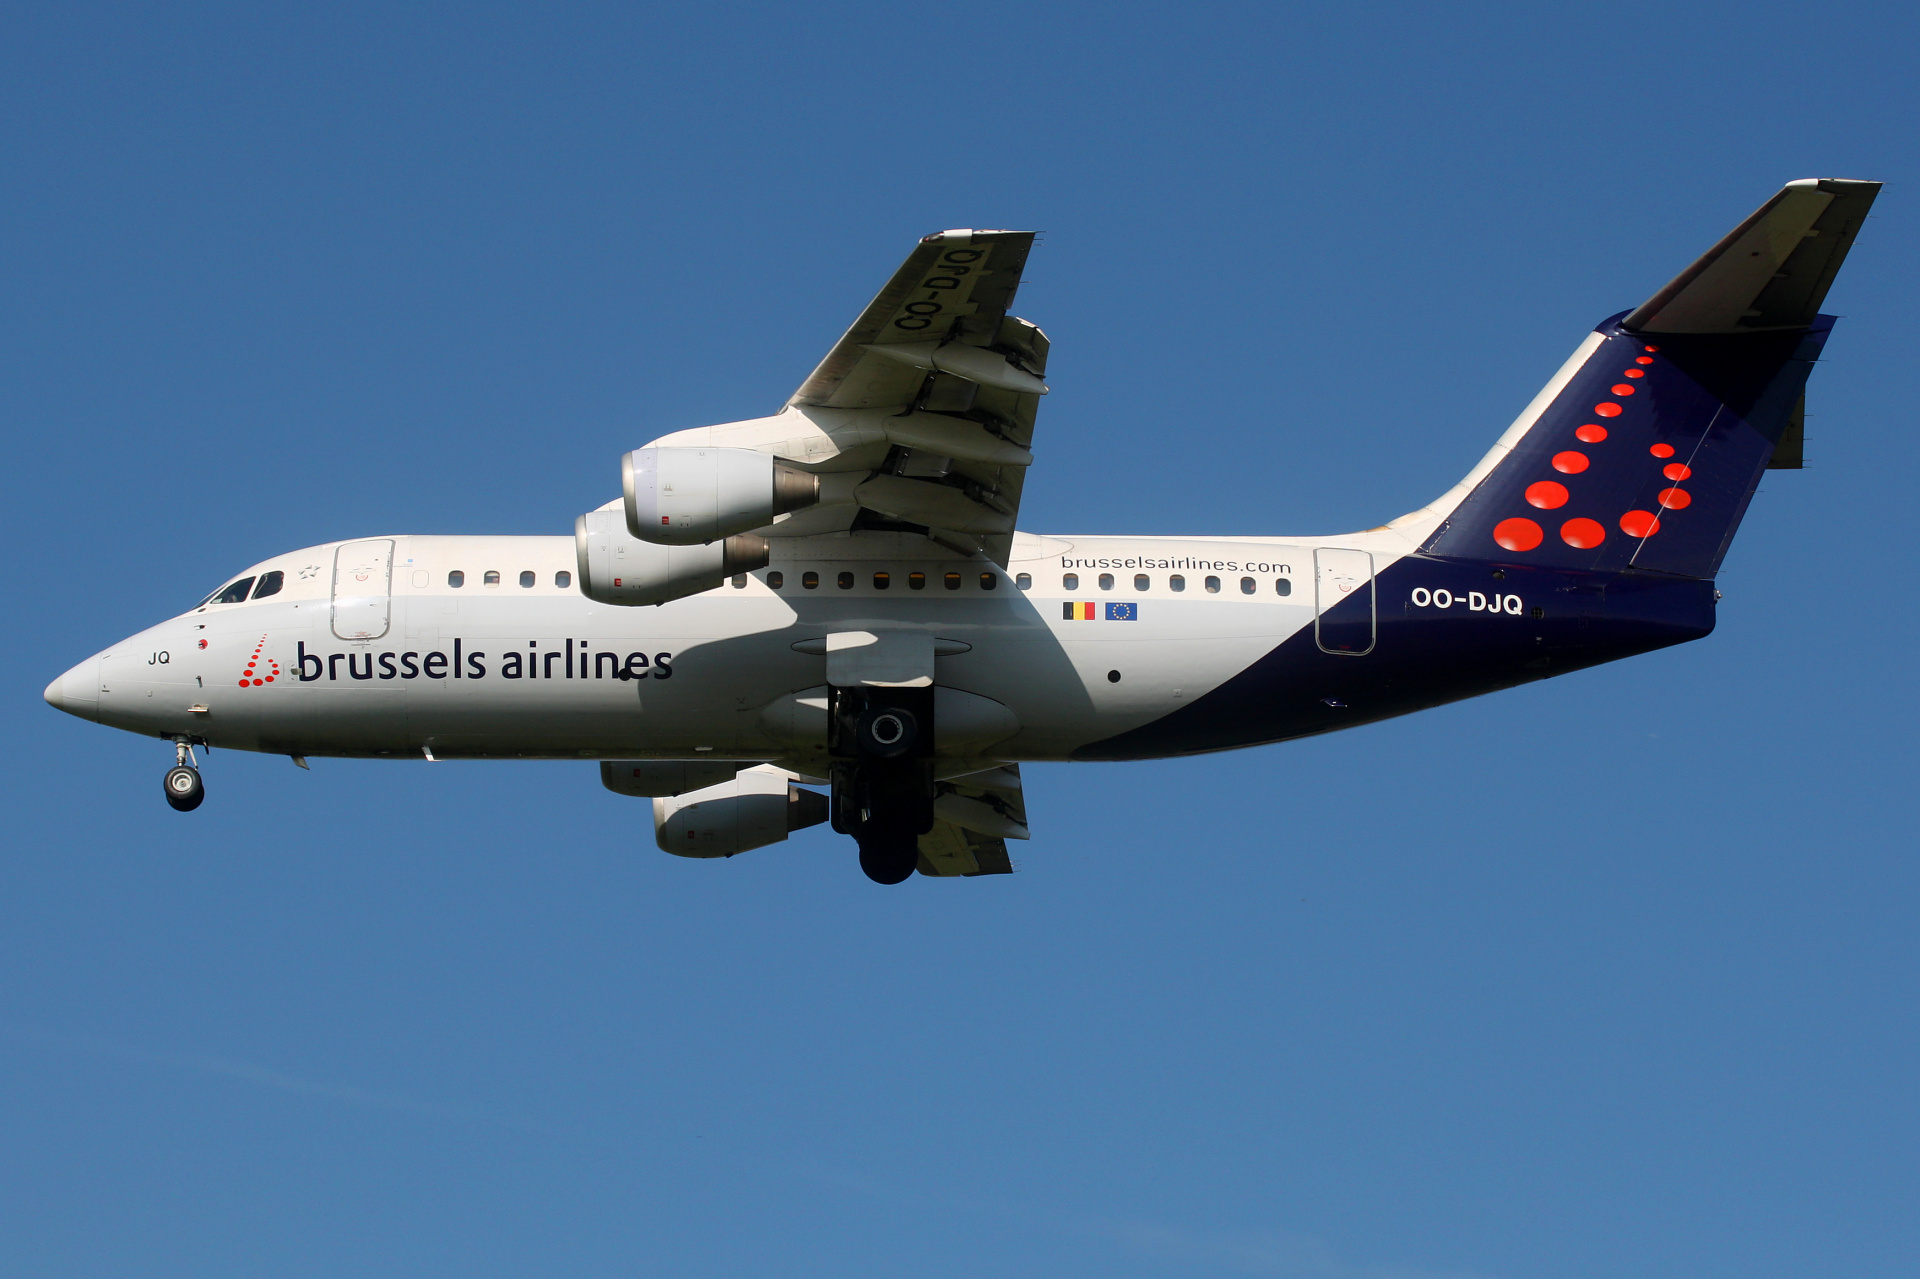 OO-DJQ (Samoloty » Spotting na EPWA » BAe 146 i pochodne wersje » Avro RJ85 » Brussels Airlines)